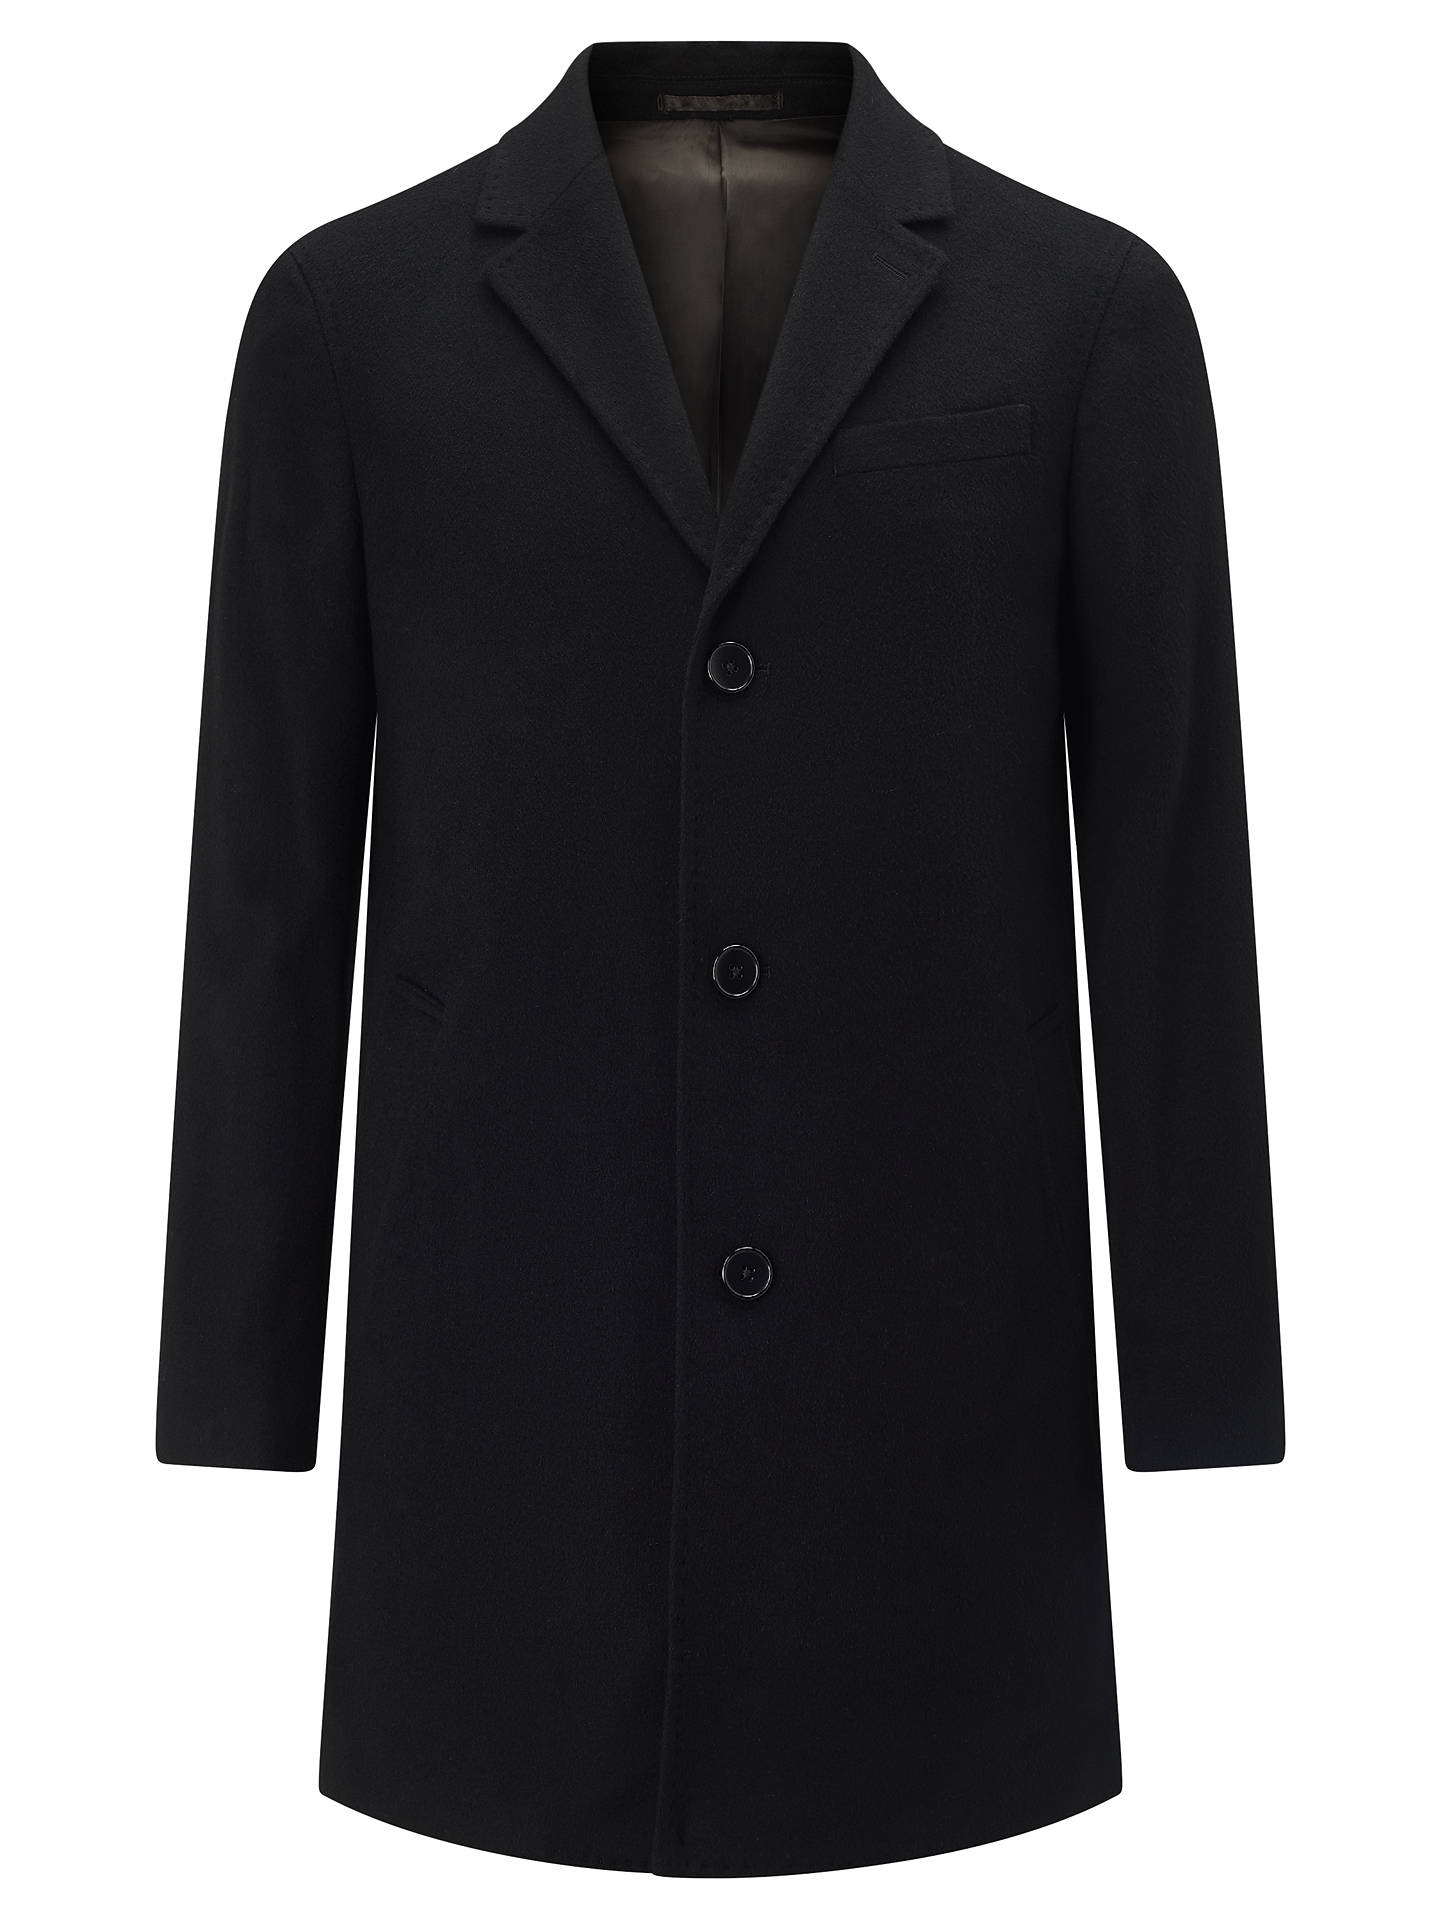 John Lewis & Partners Wool Cashmere Epsom Overcoat, Black at John Lewis ...